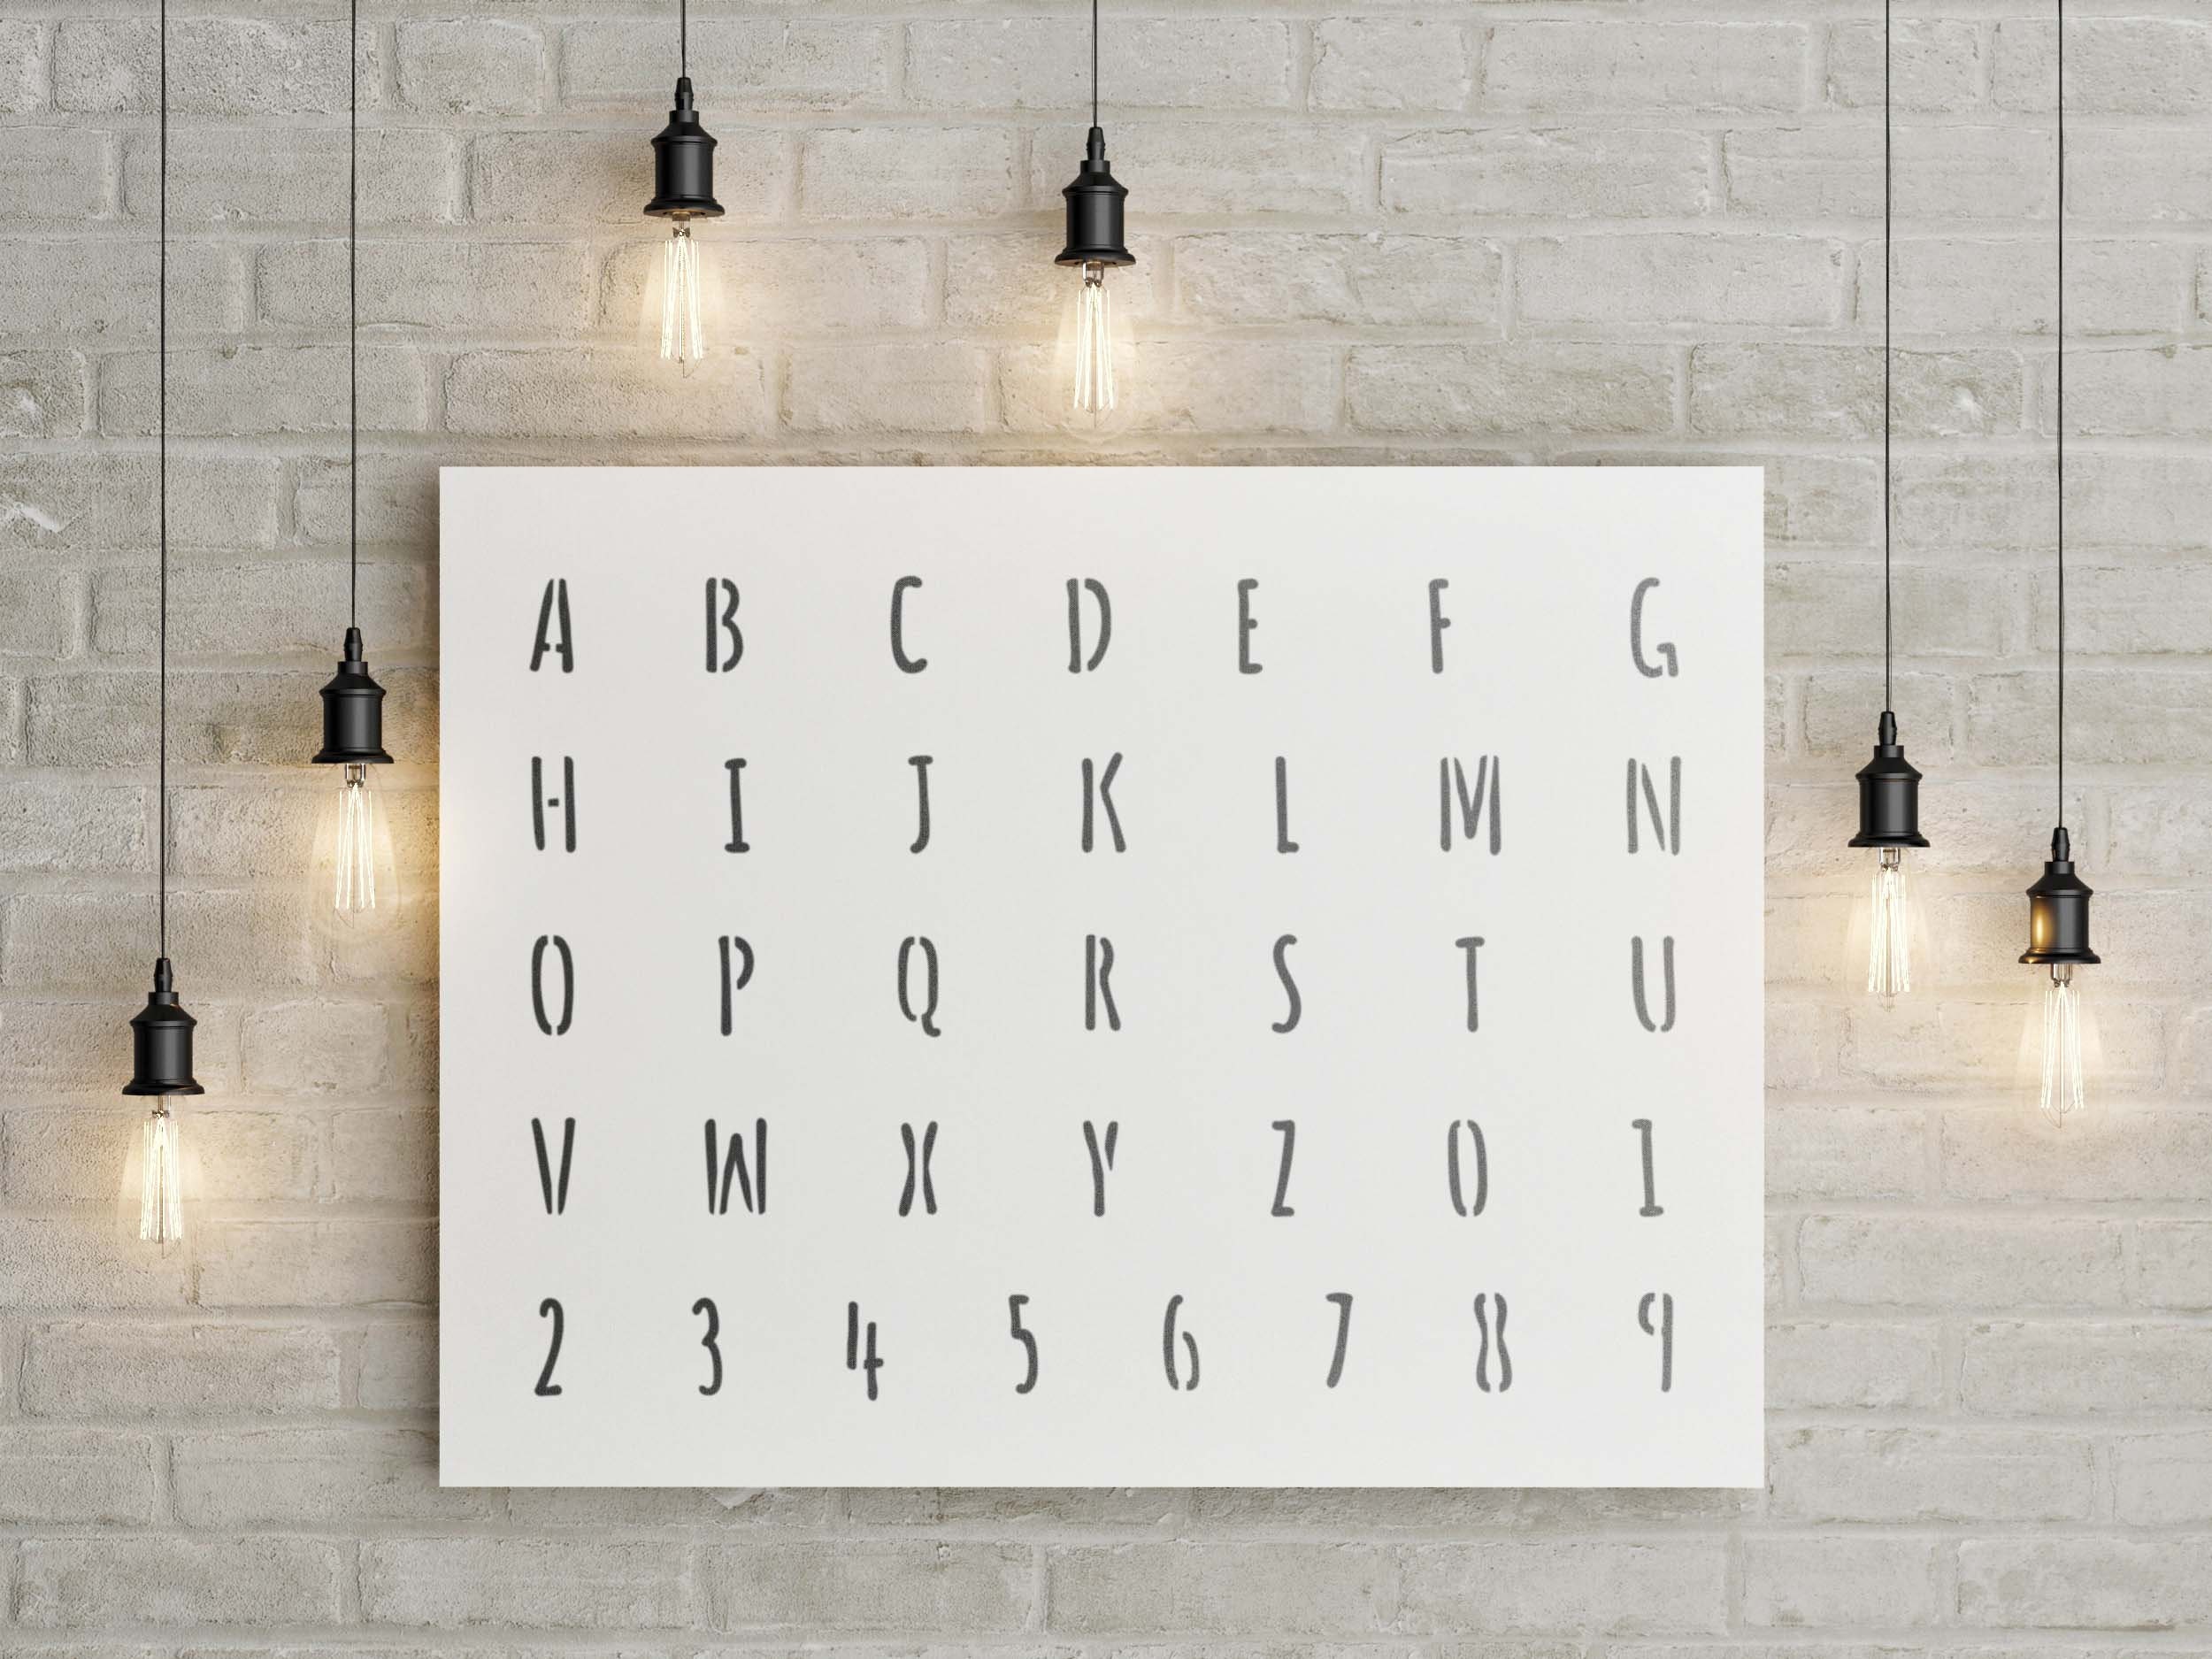 42x Alphabet Letter Stencils Symbol Numbers Templates Home Decor